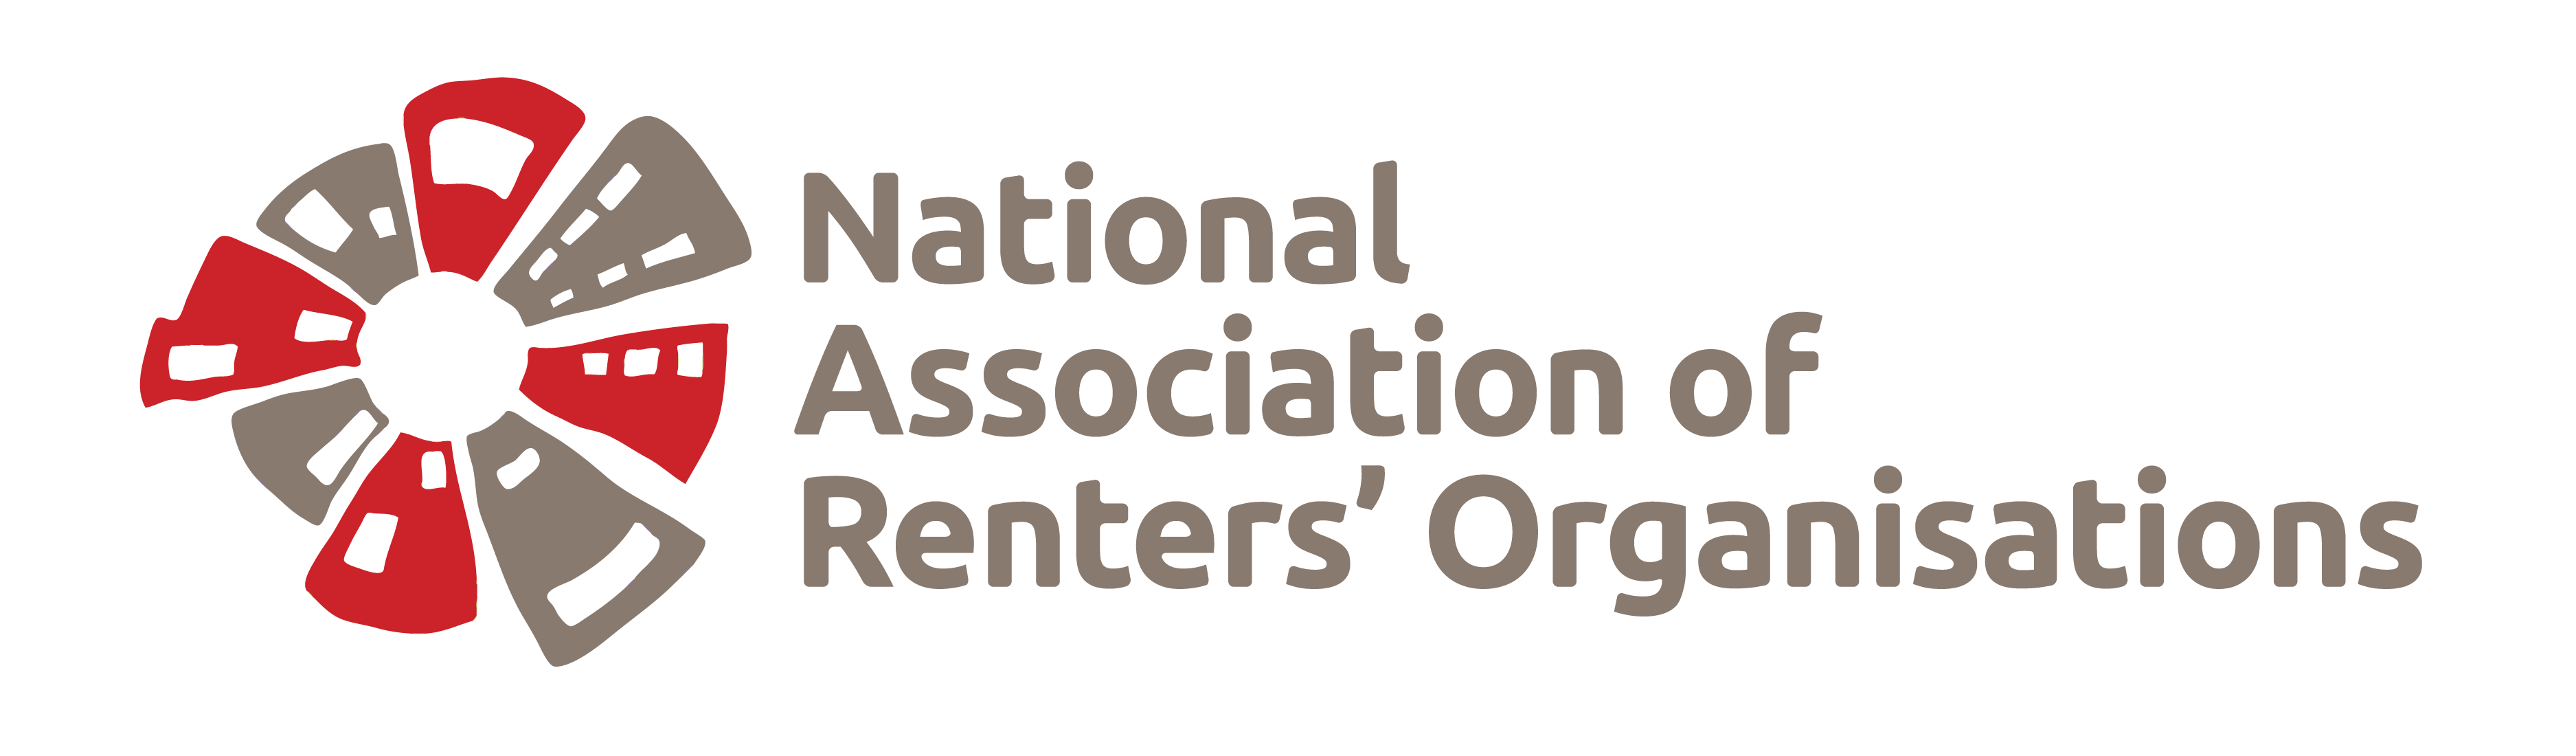 National Association of Renters' Organisations logo